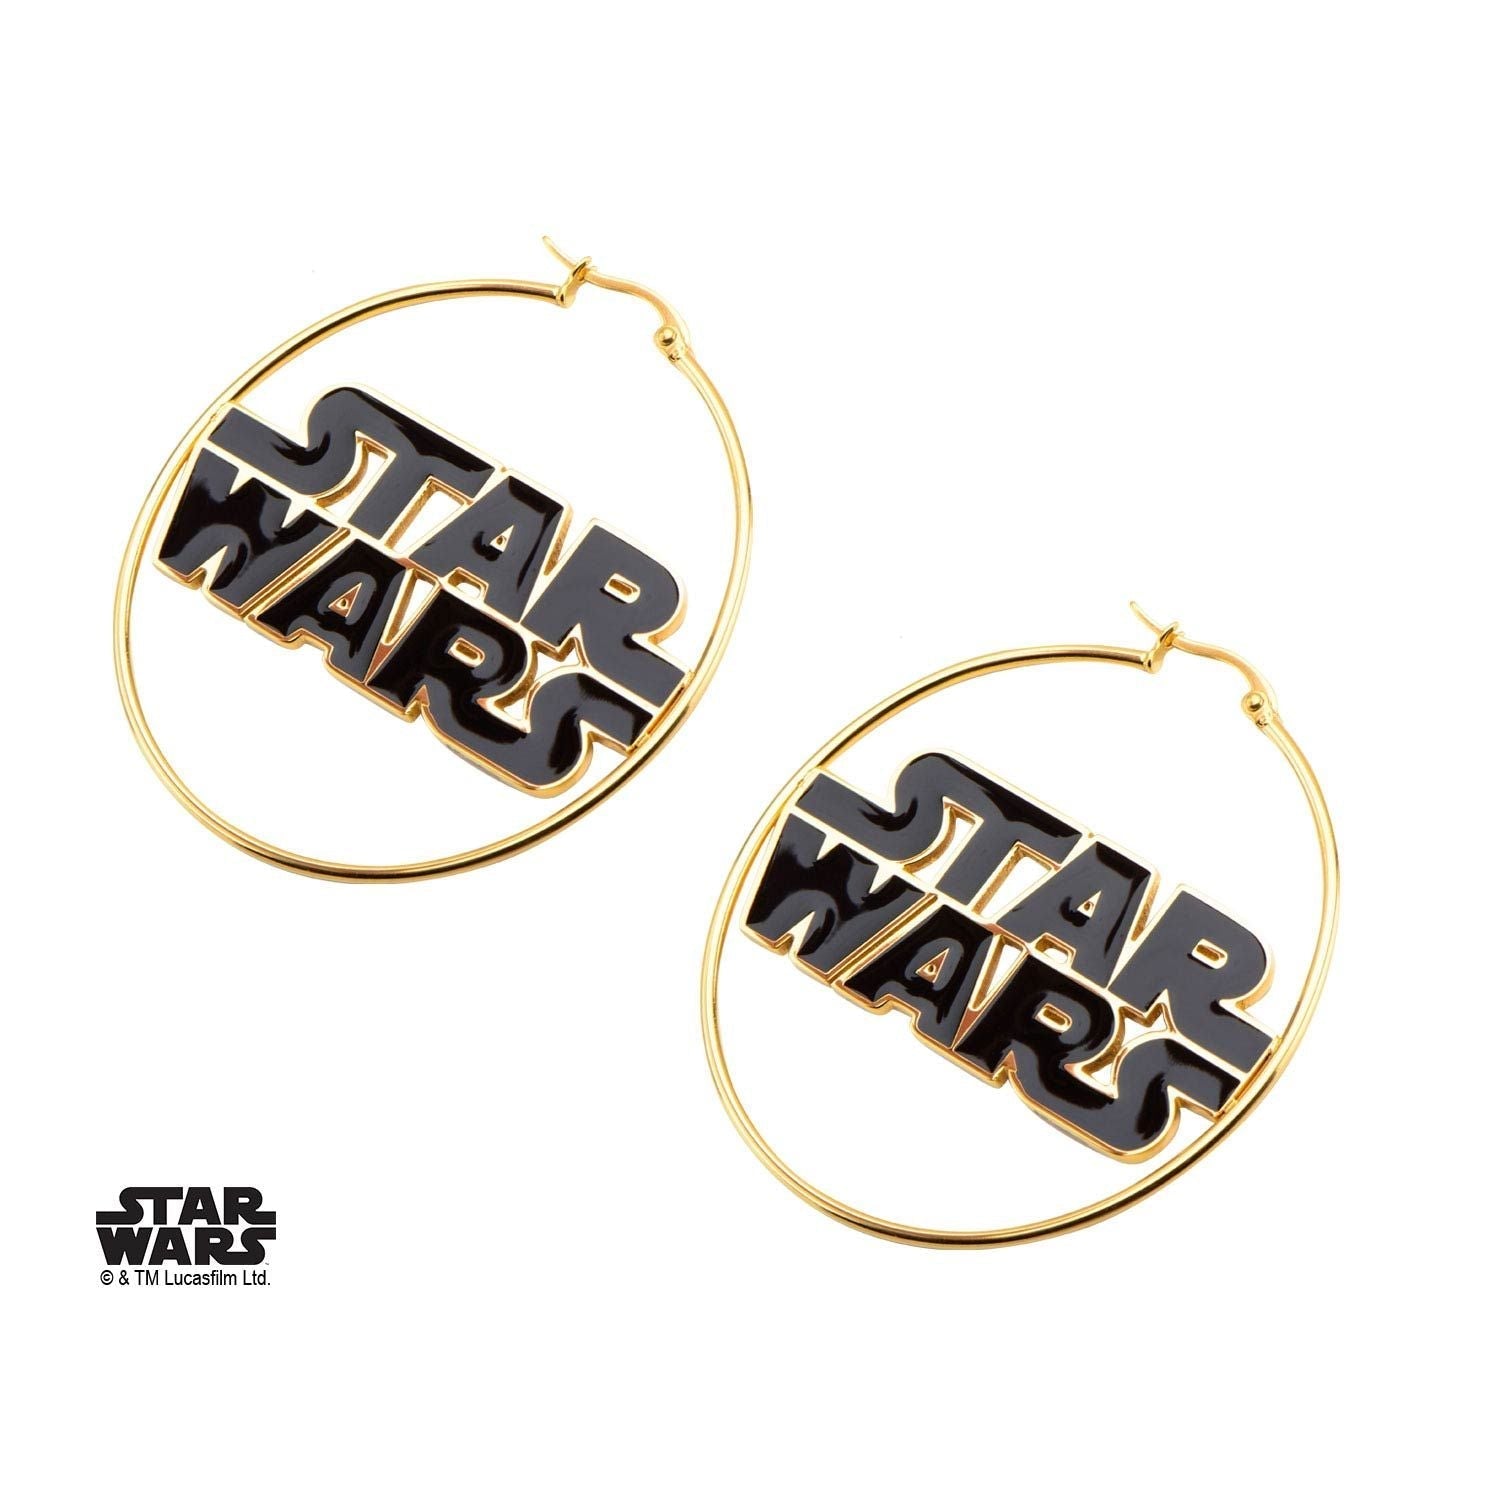 STAR WARS Star Wars Logo Gold Plated Hoop Earring -Rebel Bod-RebelBod